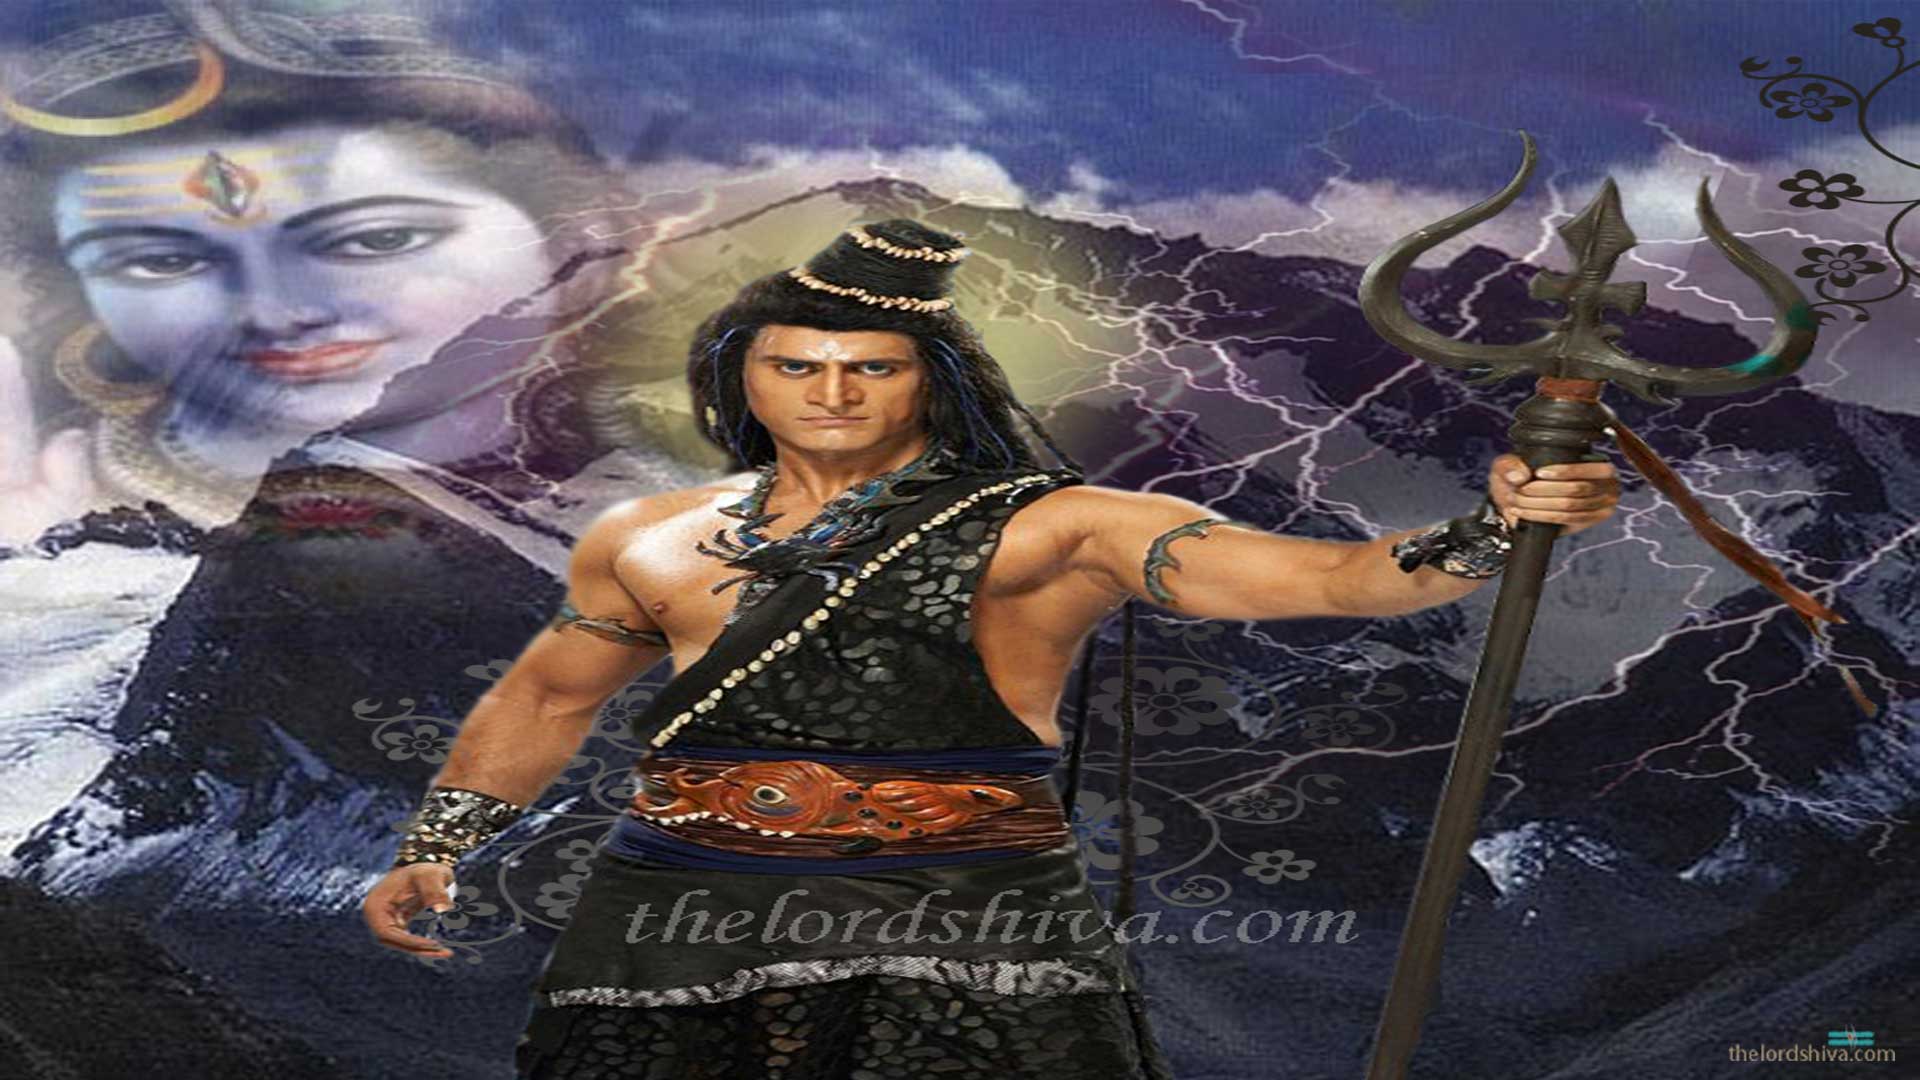 The Lord Shiva image